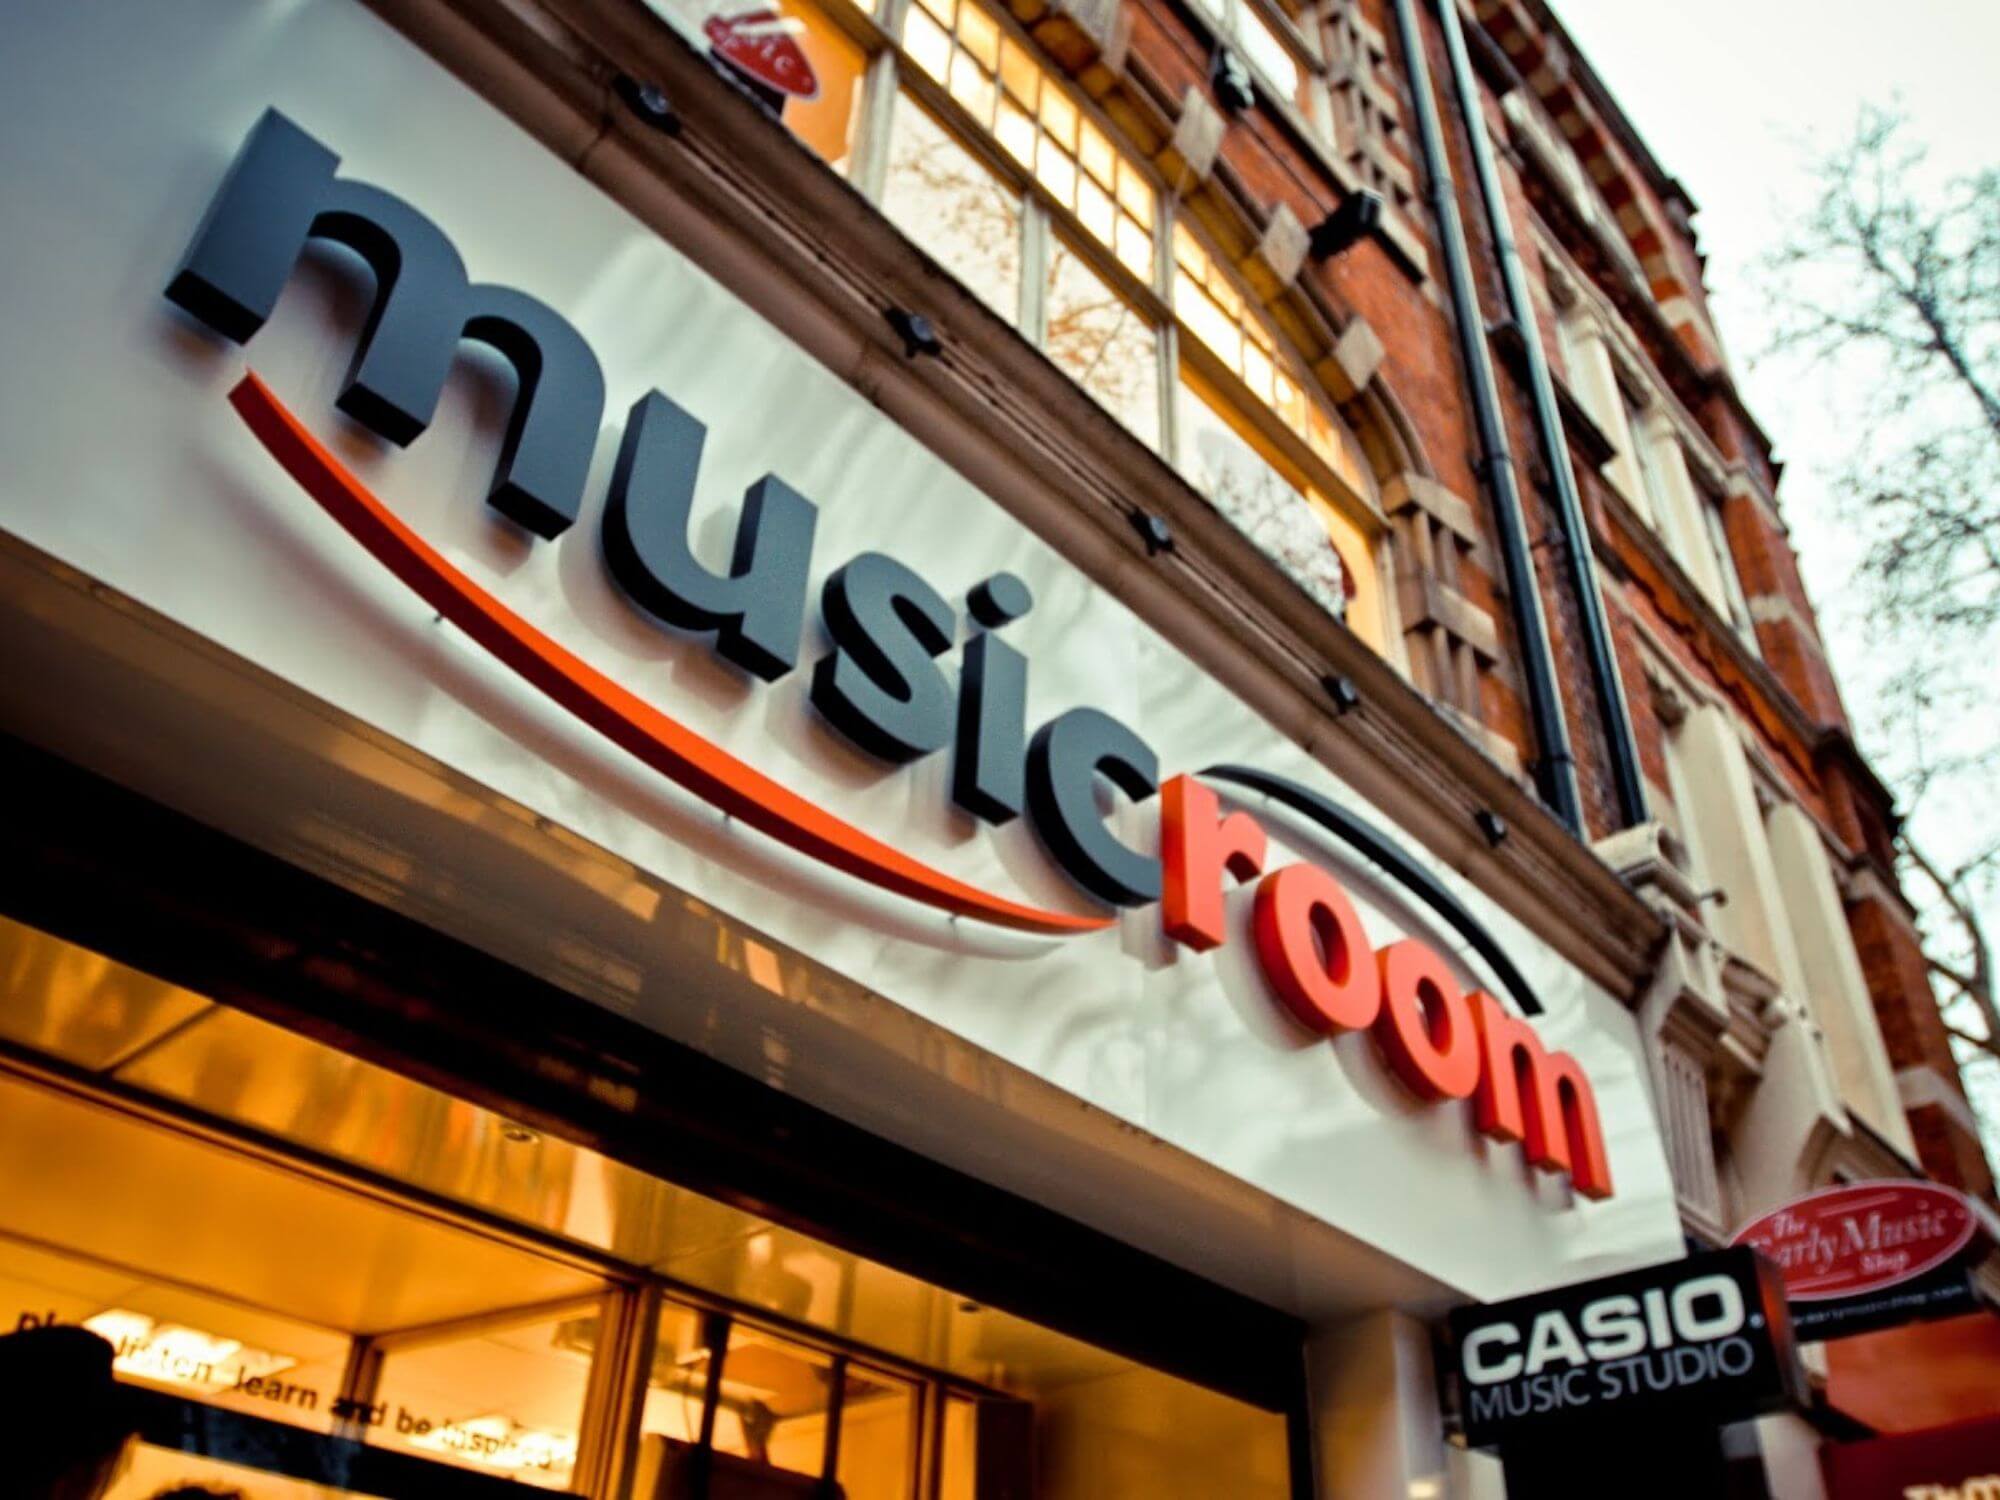 Musicroom Denmark Street, London